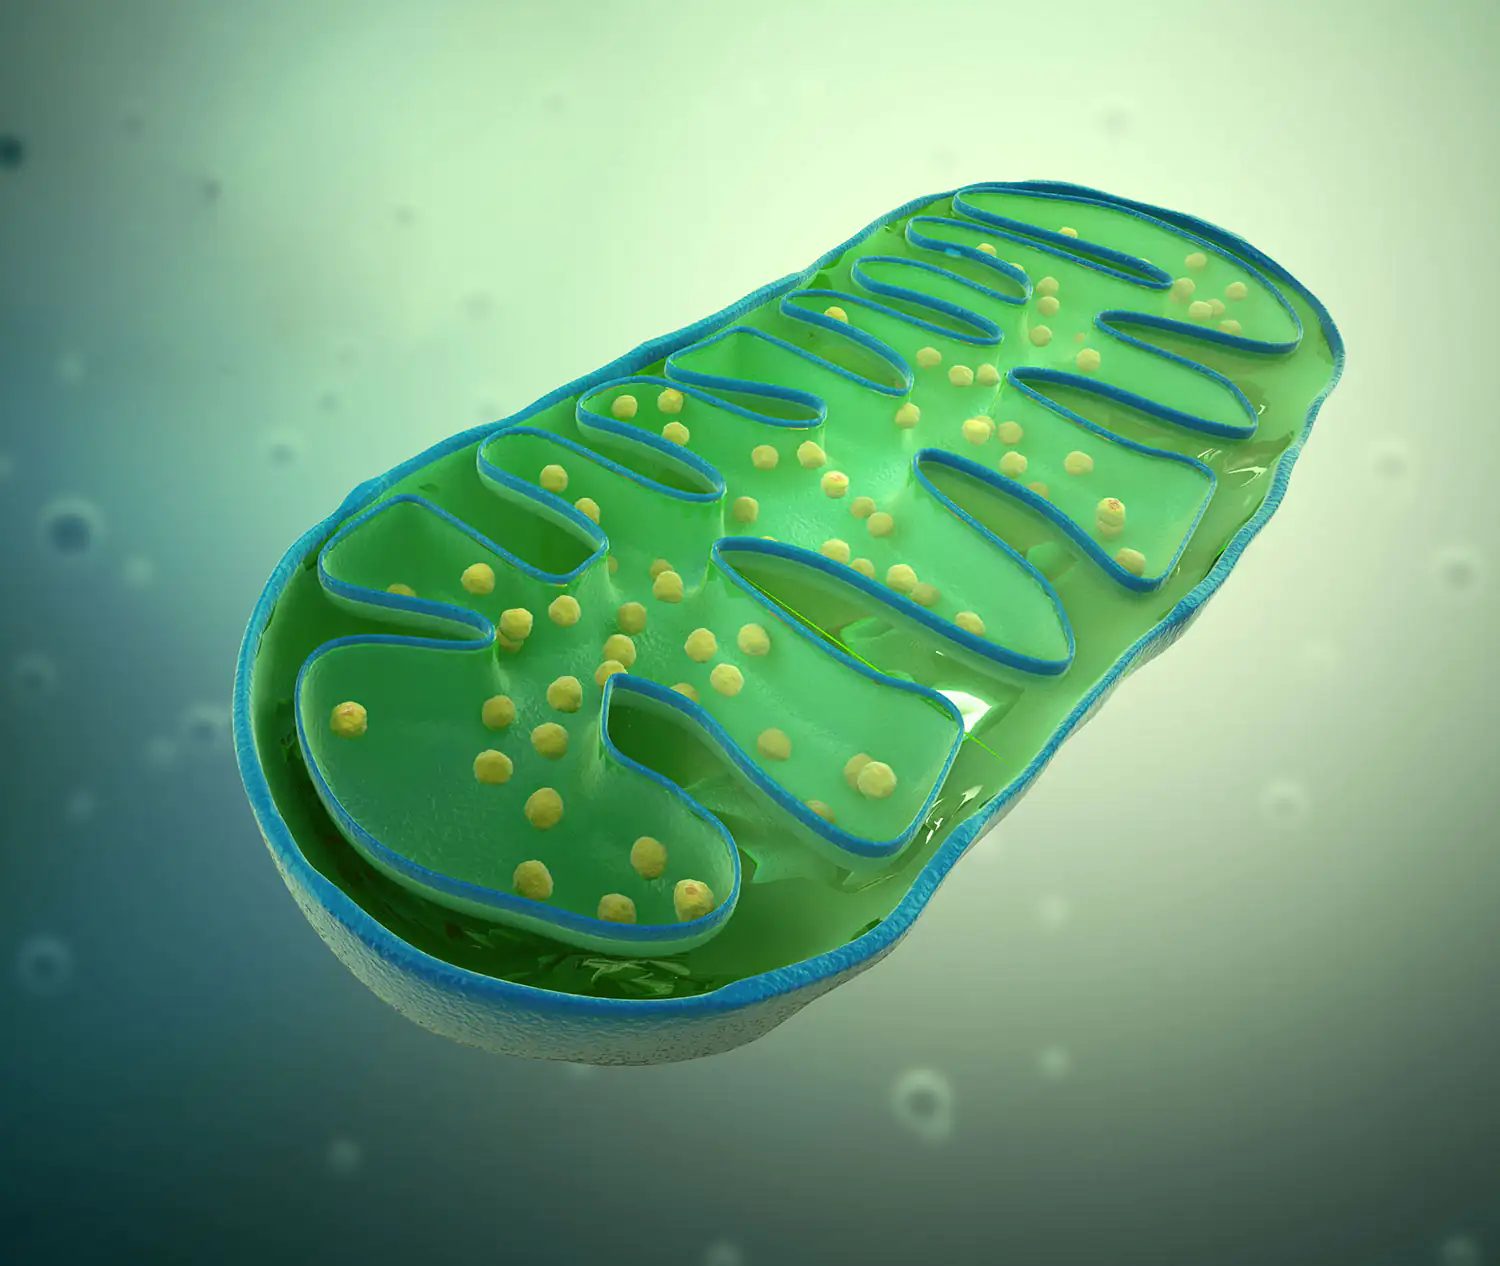 Dessin schématique de la mitochondrie